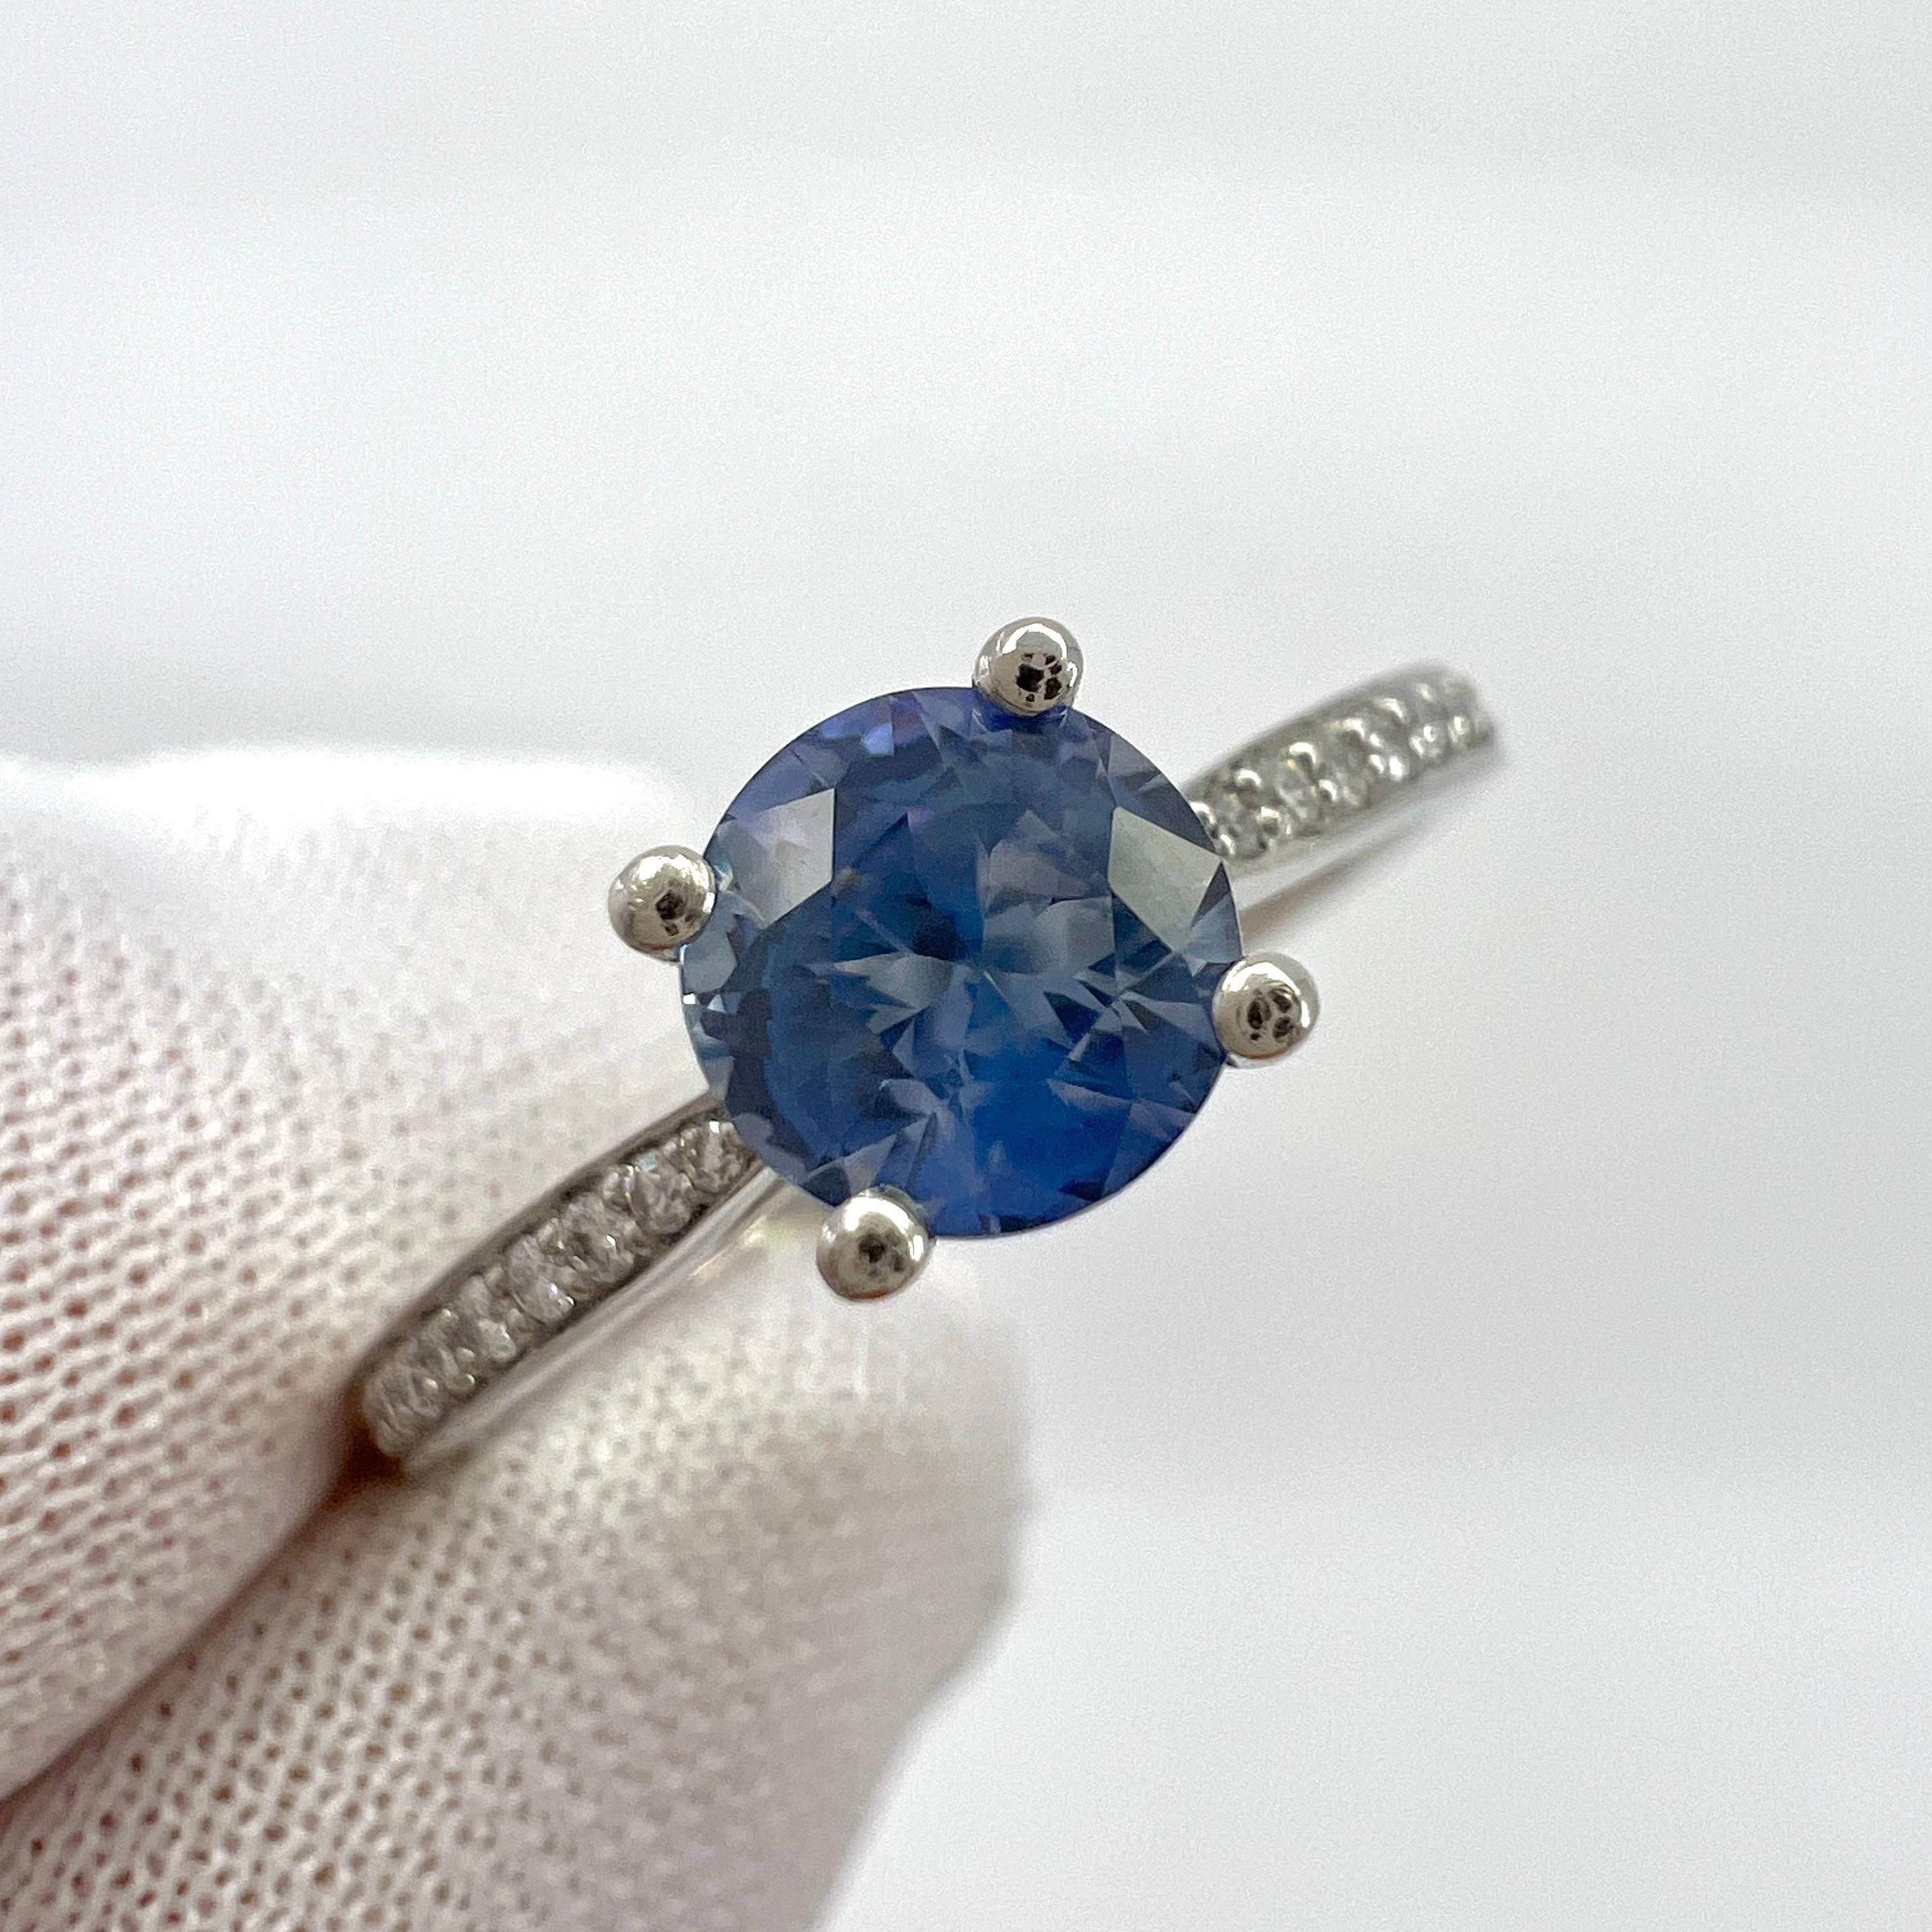 Fine Round Brilliant Cut Light Blue Ceylon Sapphire And Diamond Platinum Ring.

Unique 5.4mm Ceylon sapphire with a stunning vivid light blue colour. 0.67 Carat.

The sapphire has an excellent round brilliant cut showing lots of brightness and light